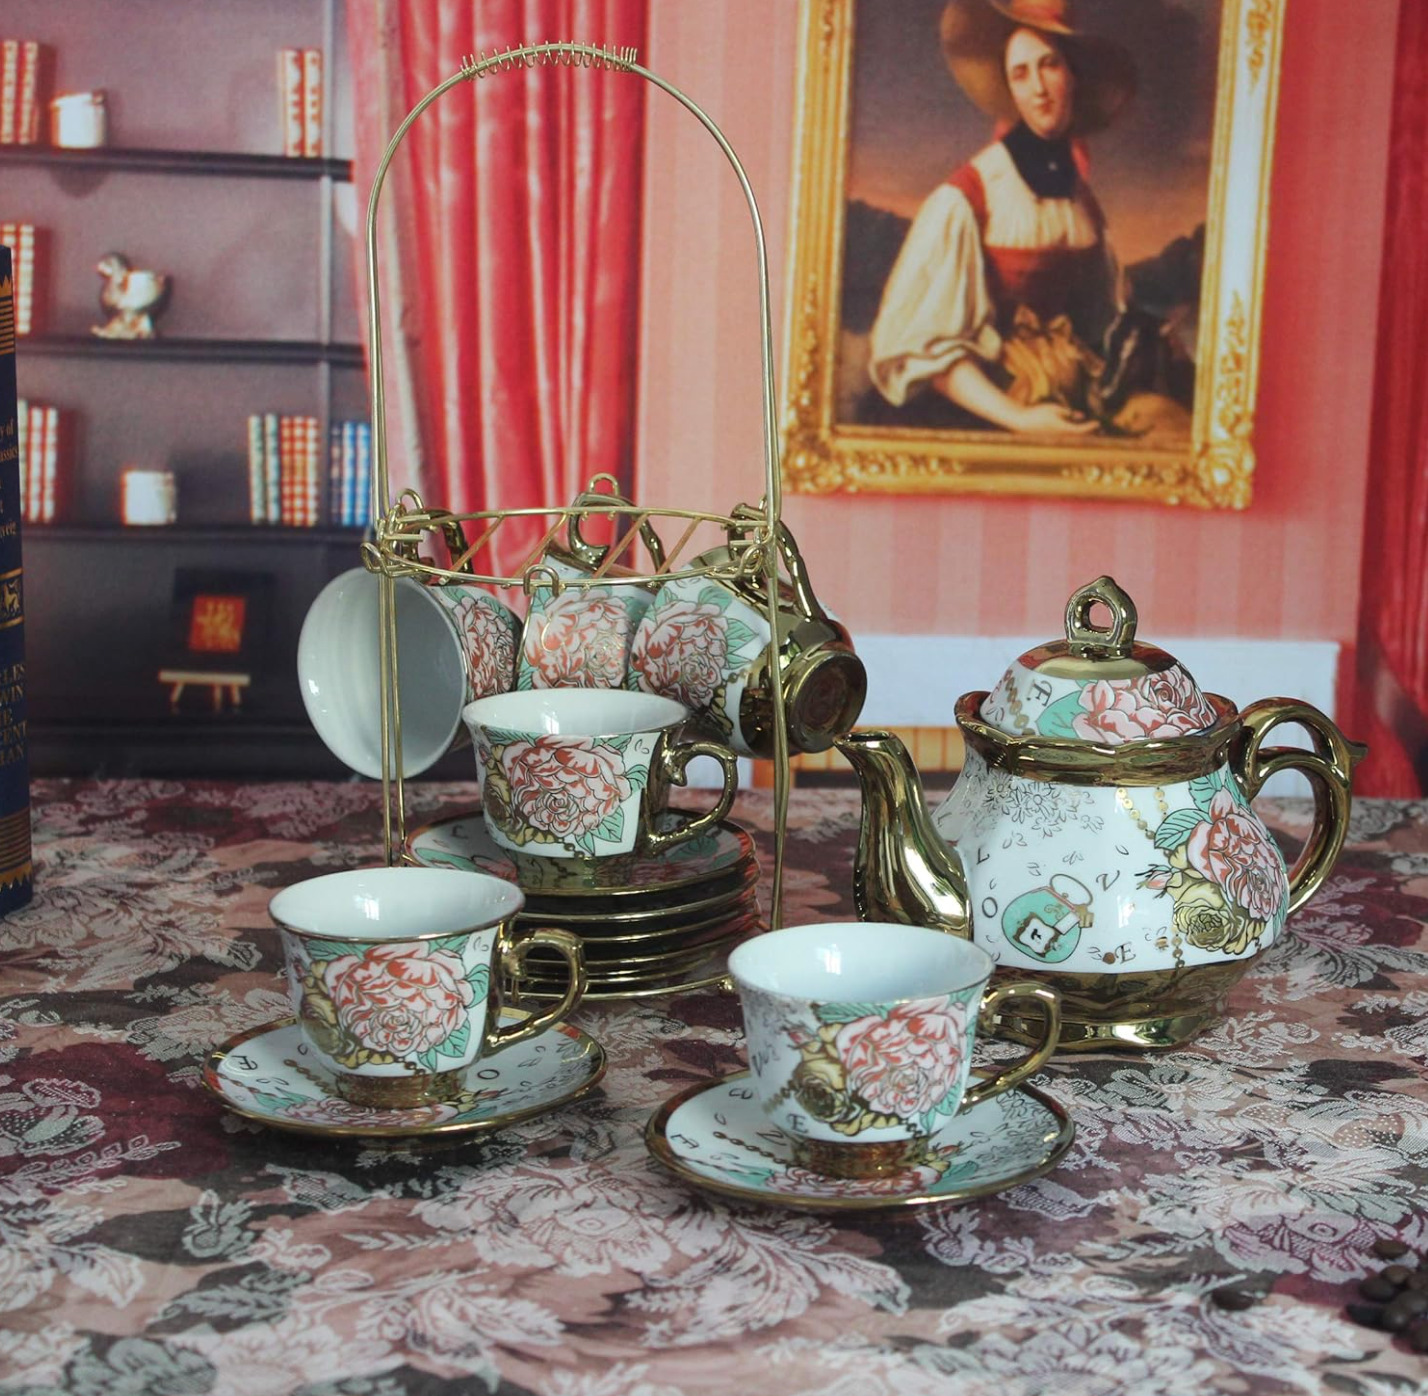 English Porcelain Tea Set Vintage Floral Style China Teapot Wedding Gift for Her